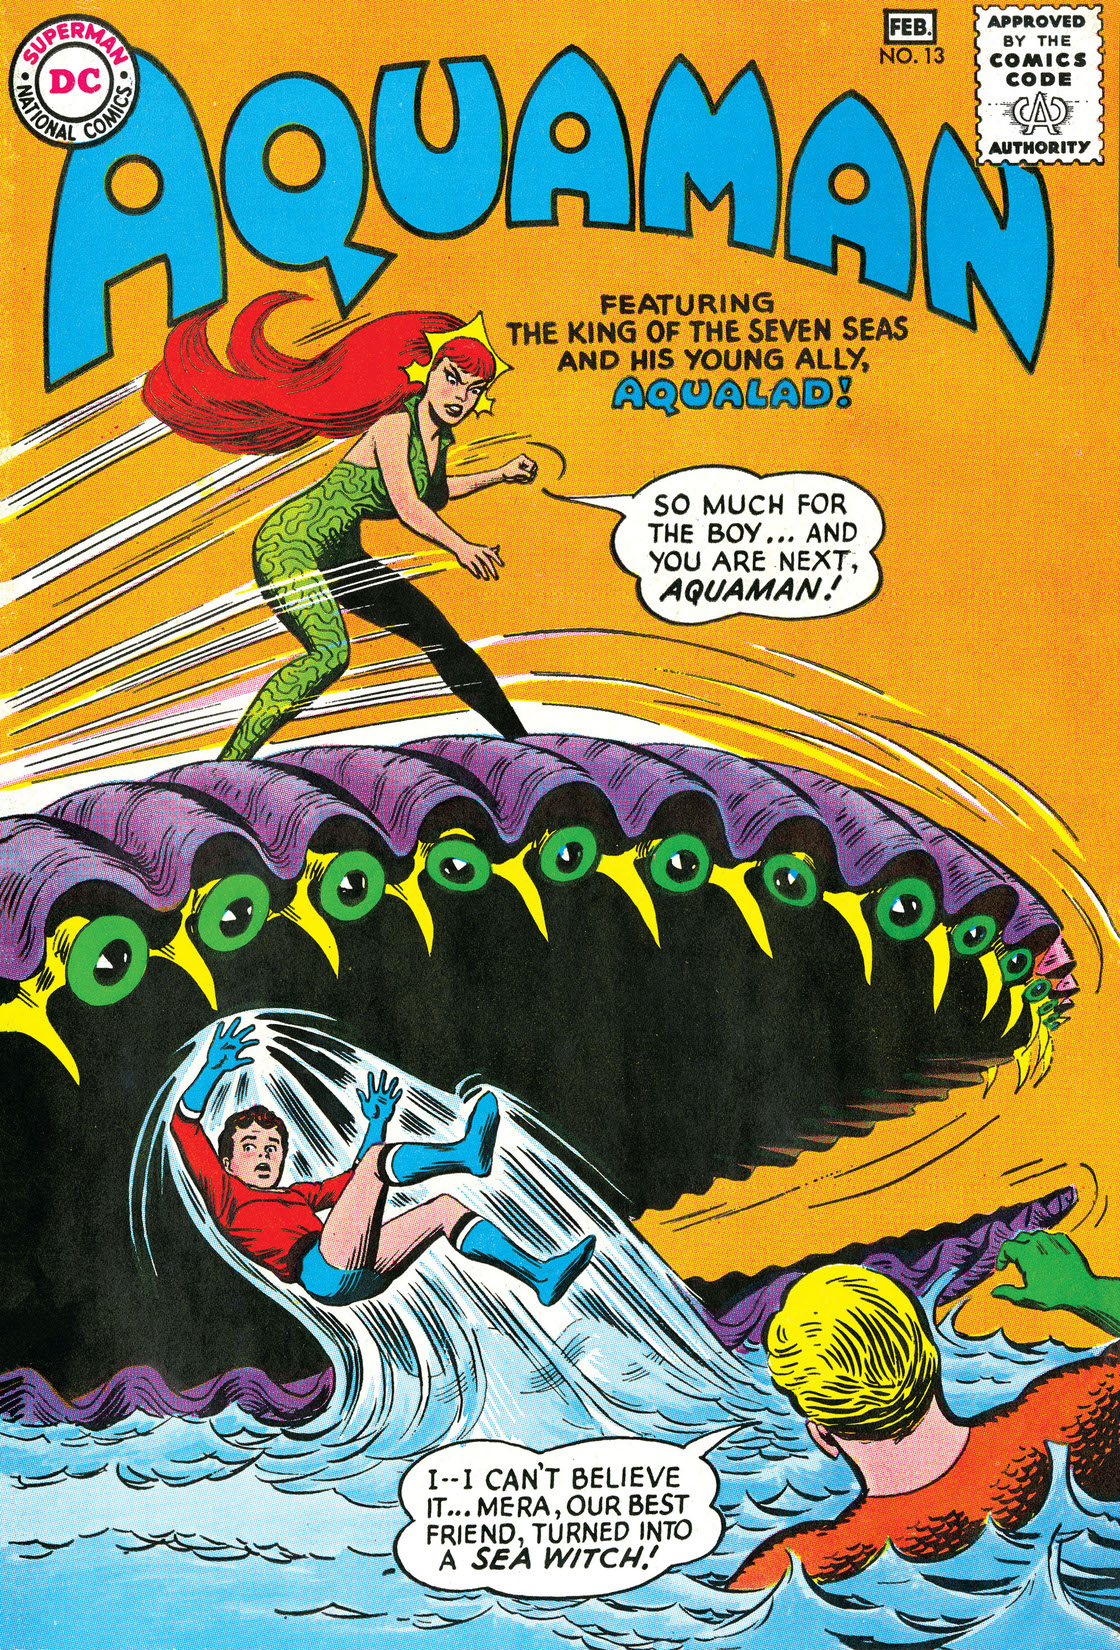 Aquaman (1962-) #13 preview images